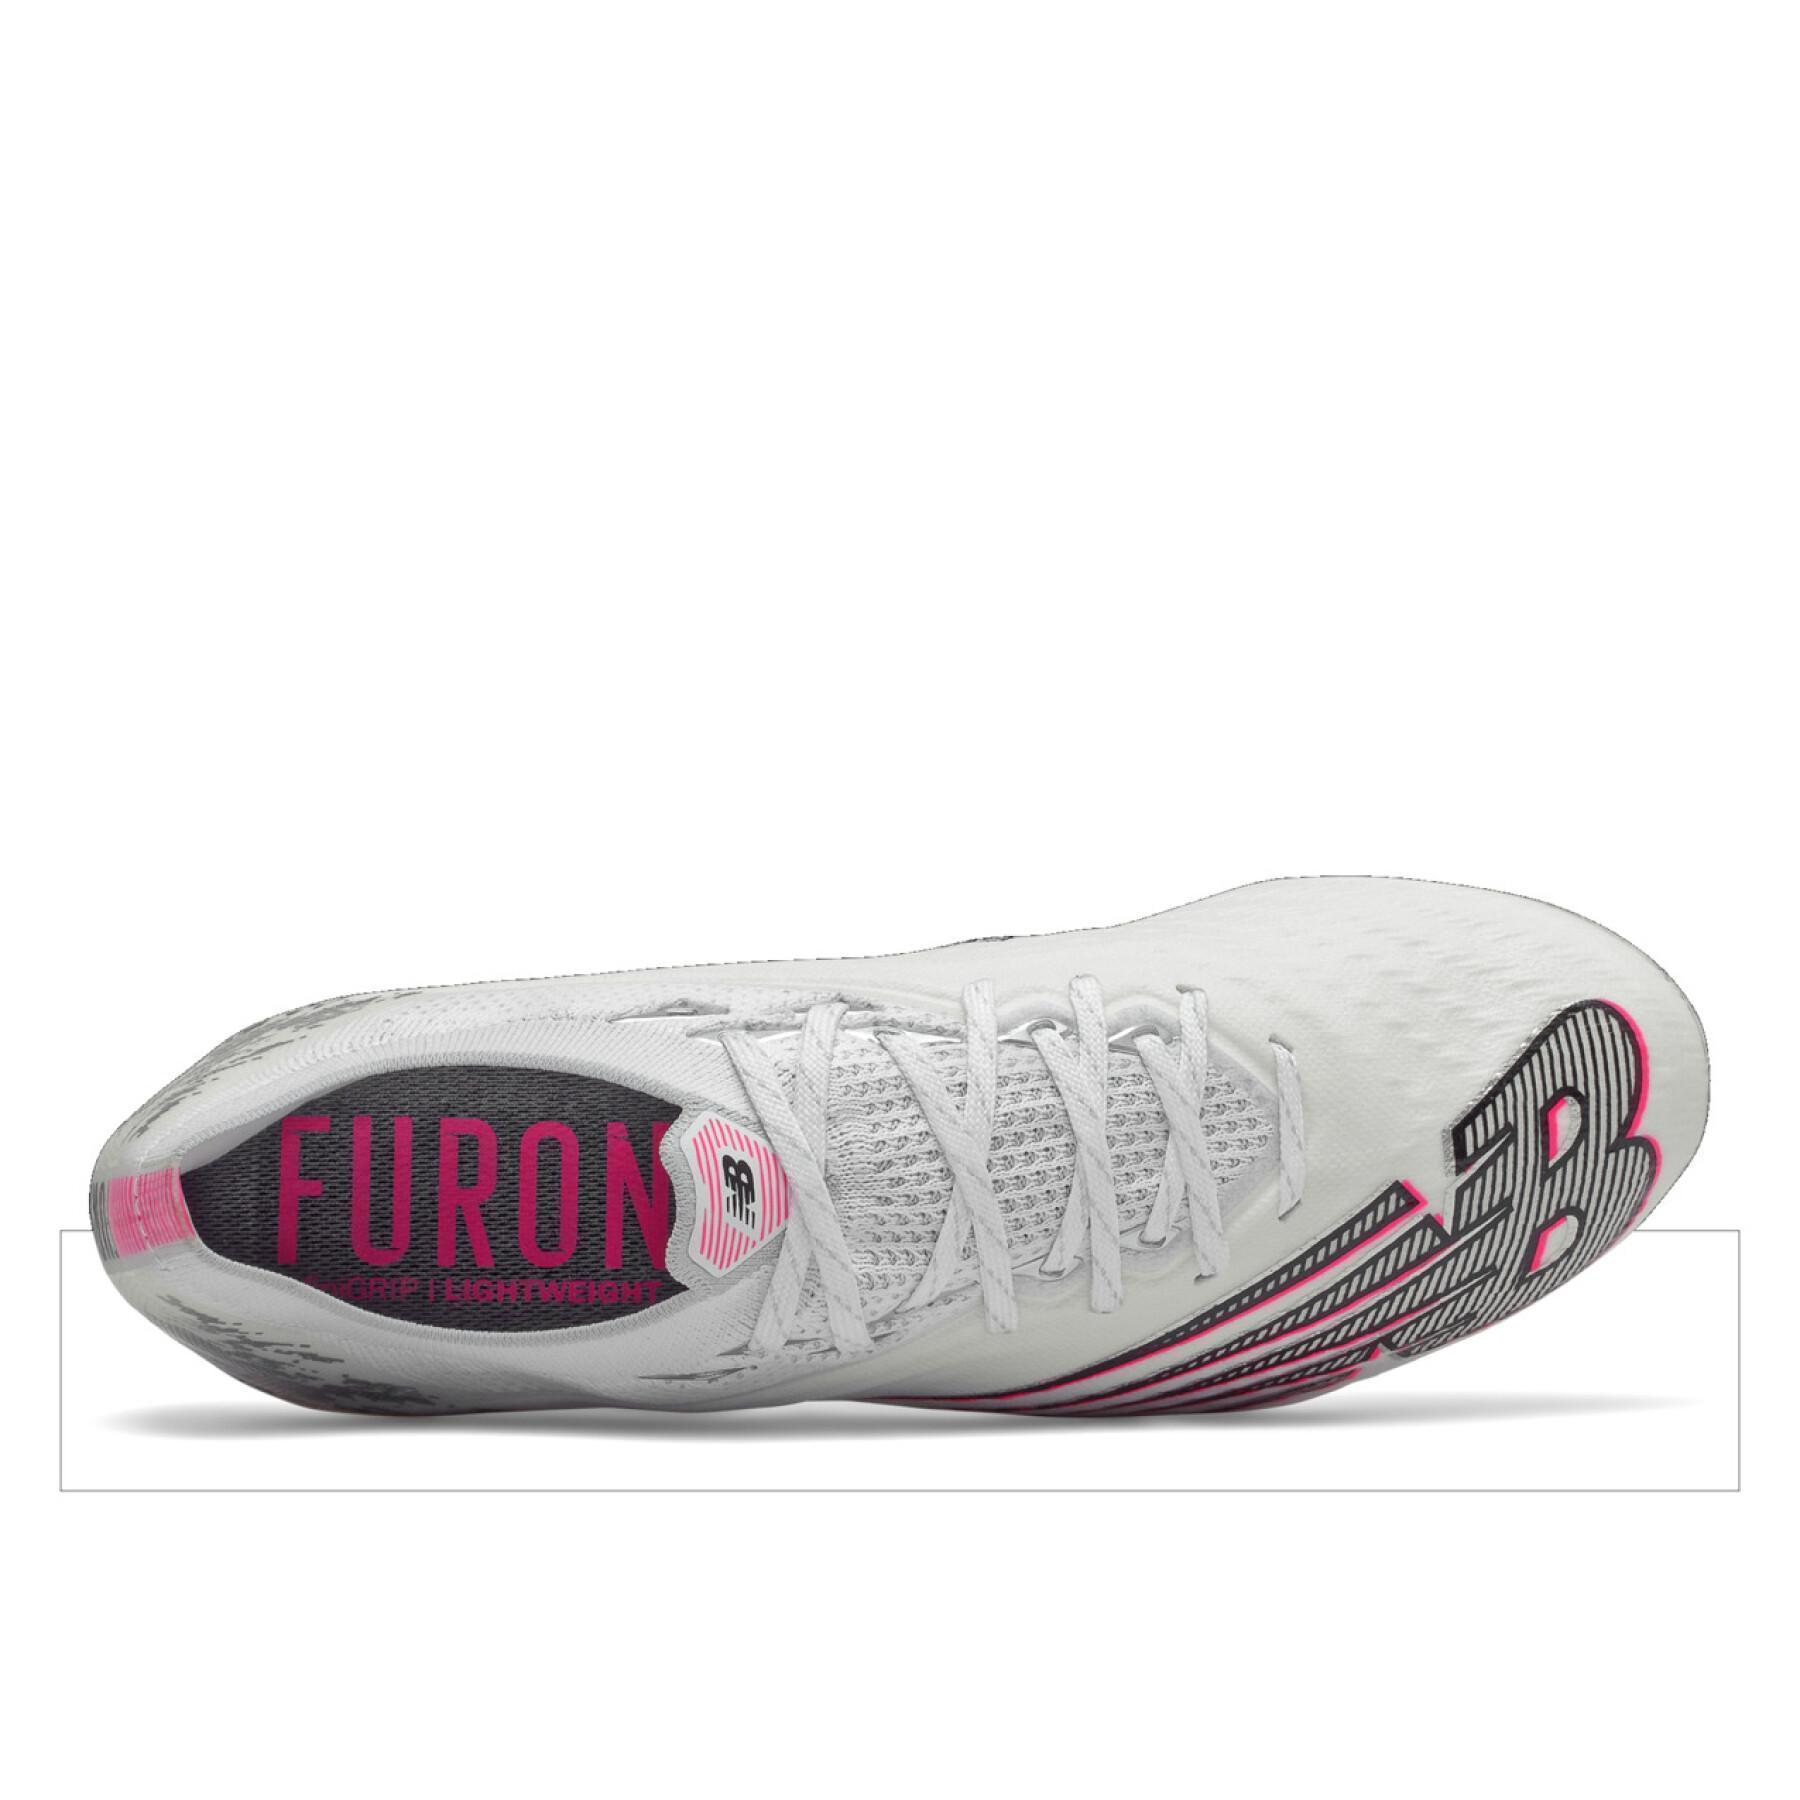 Chaussures New Balance Furon Pro FG